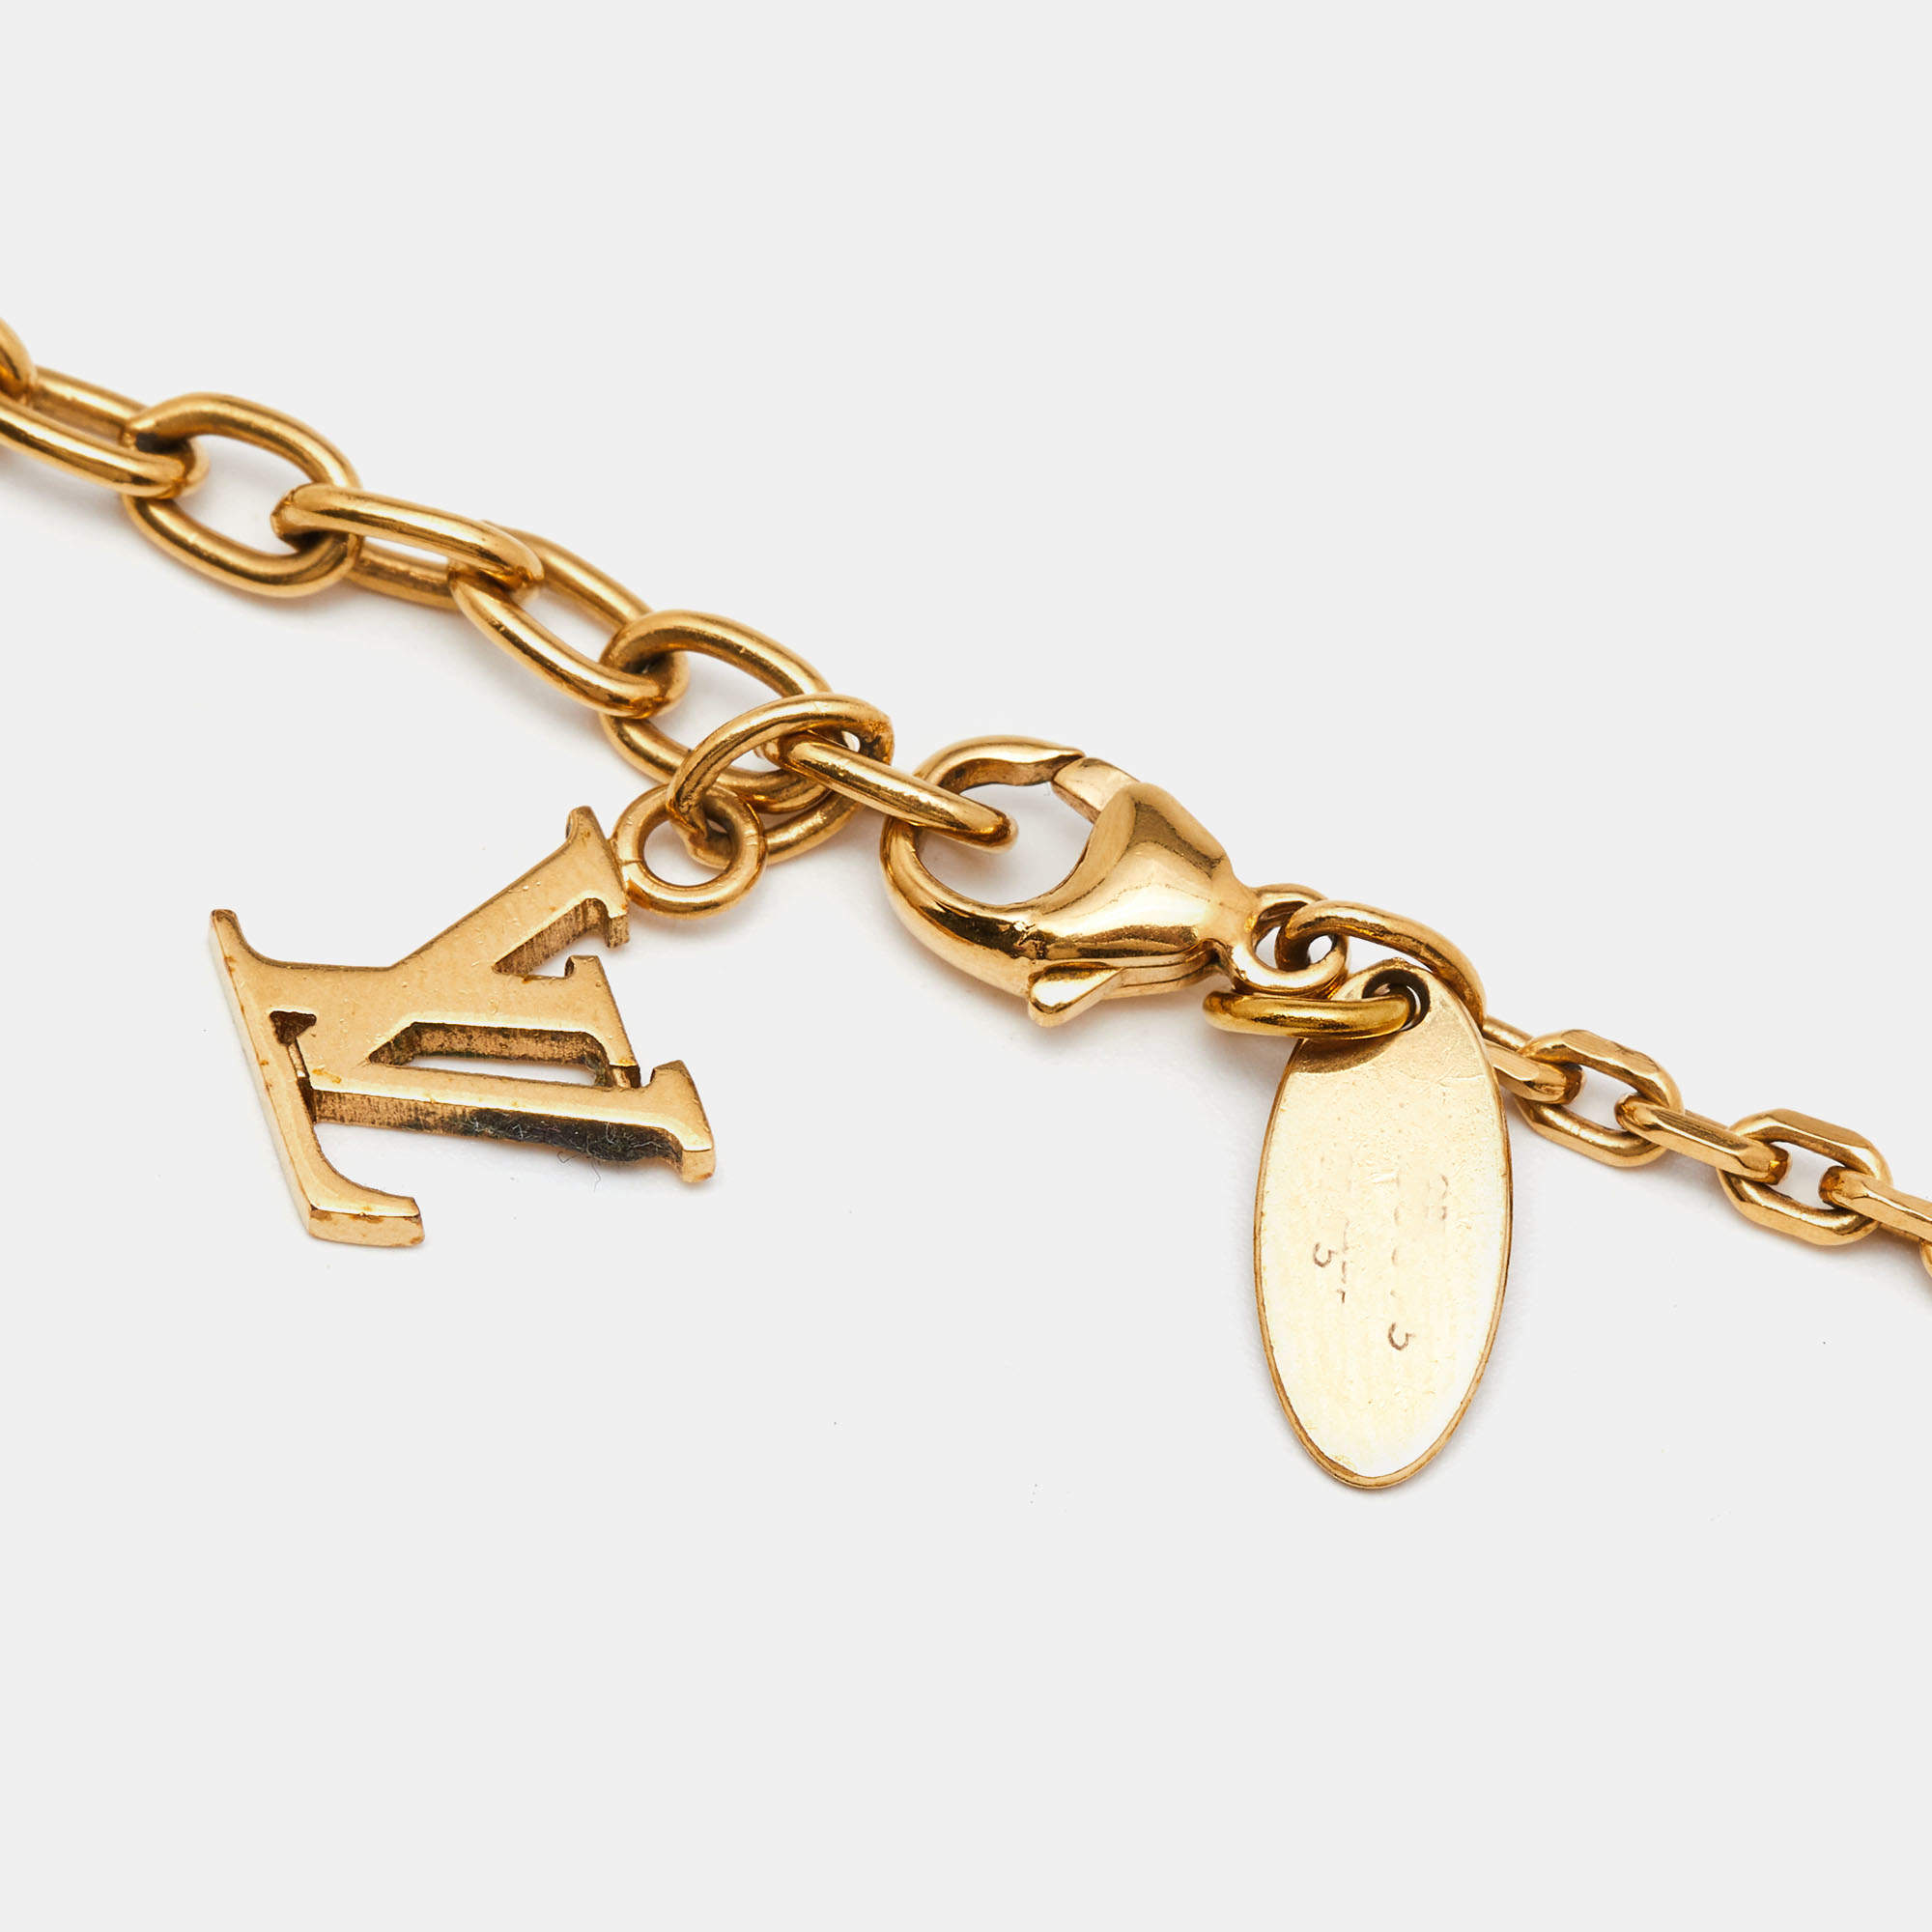 Louis Vuitton Gamble Station Bracelet